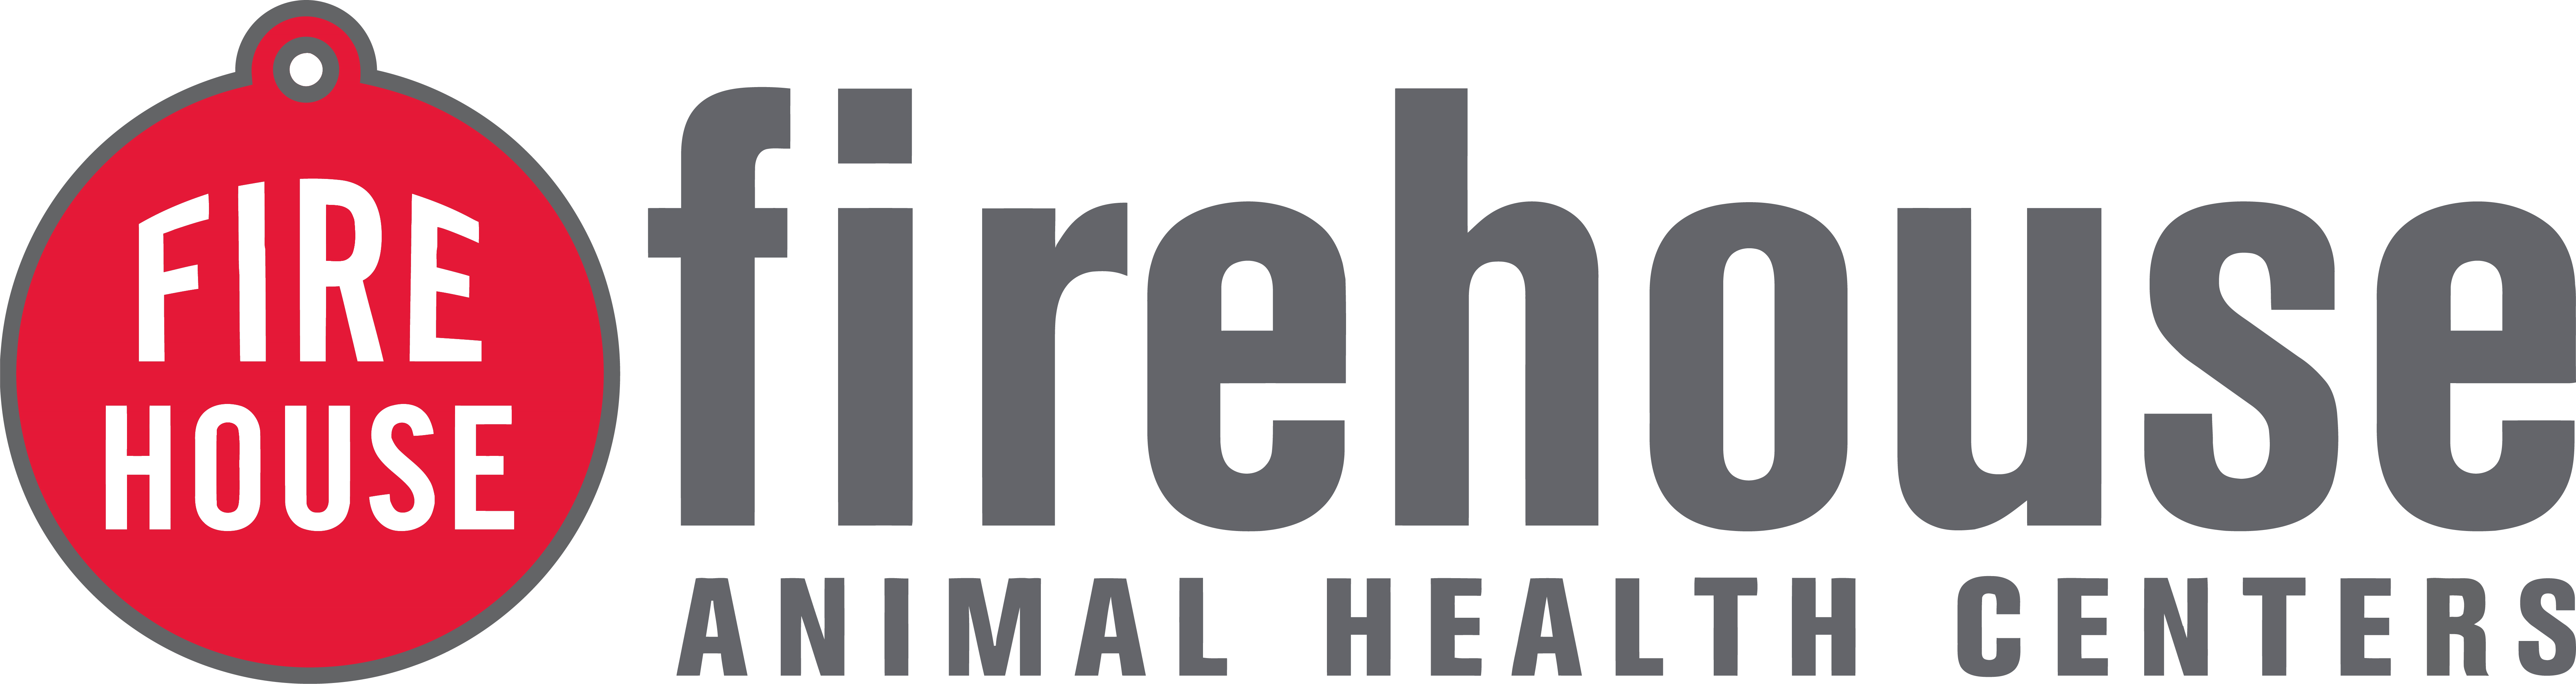 Firehouse Animal Health Centers logo